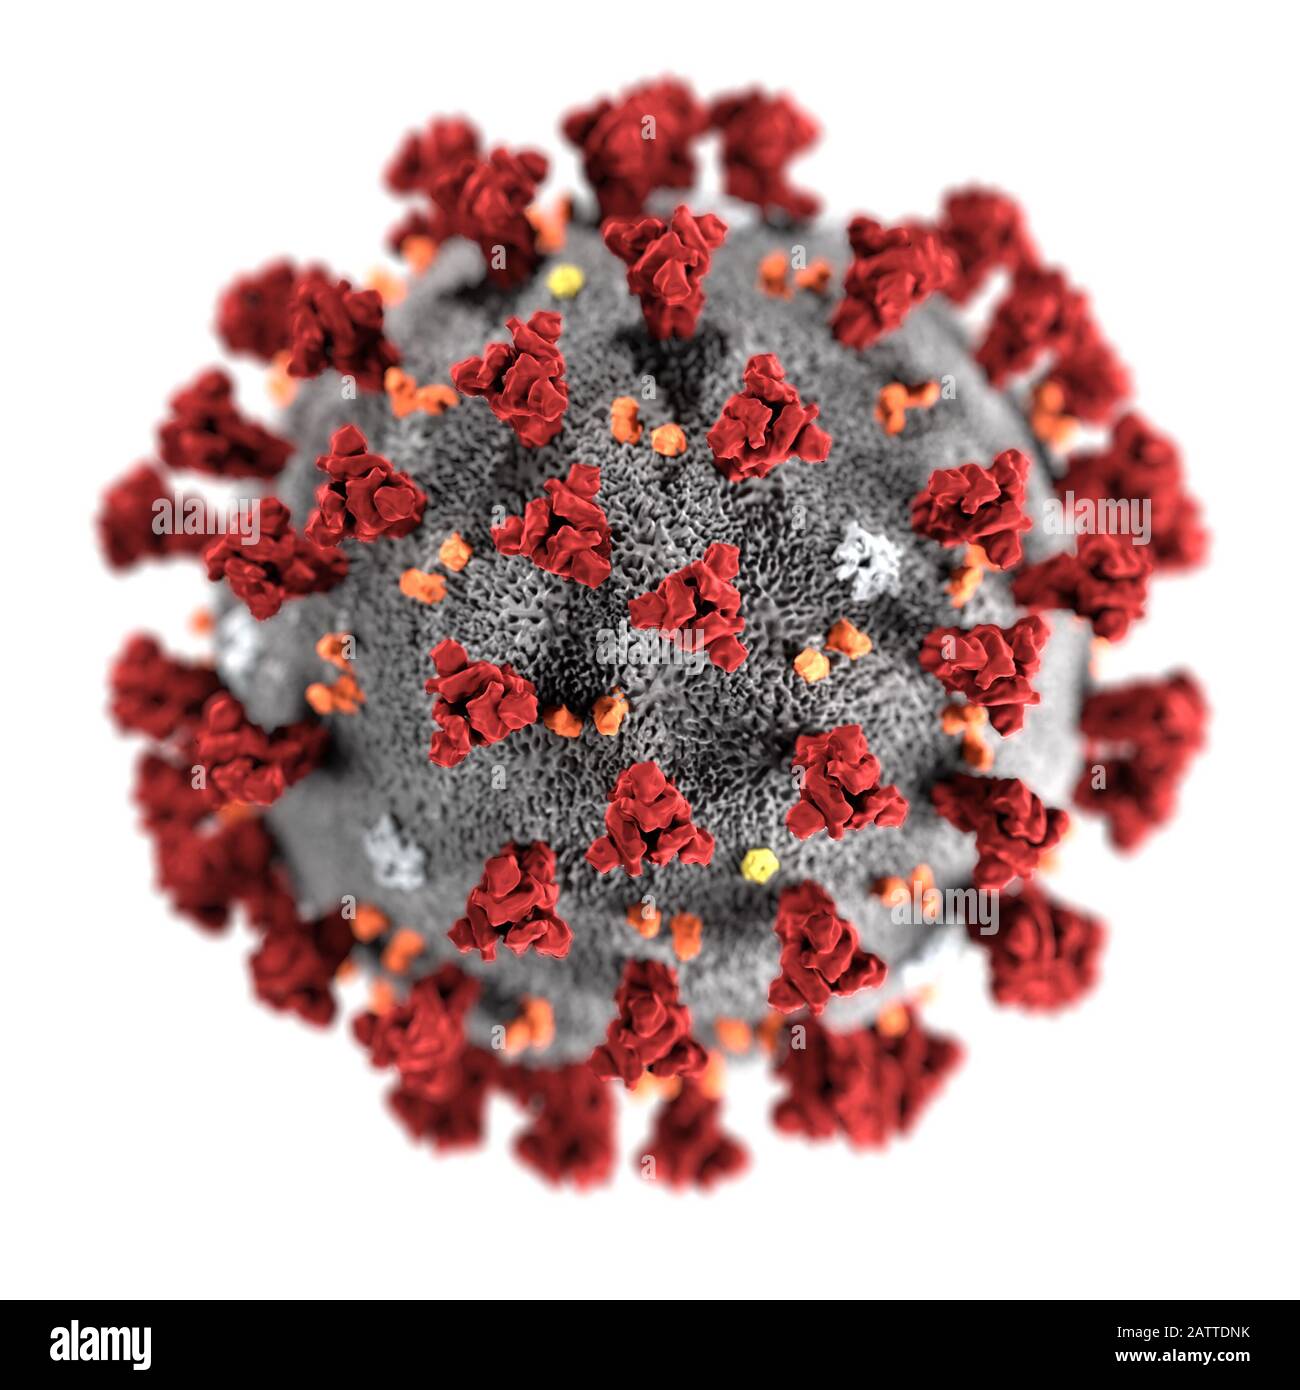 Coronaviruse ultrastrukturelle Morphologie. Stockfoto